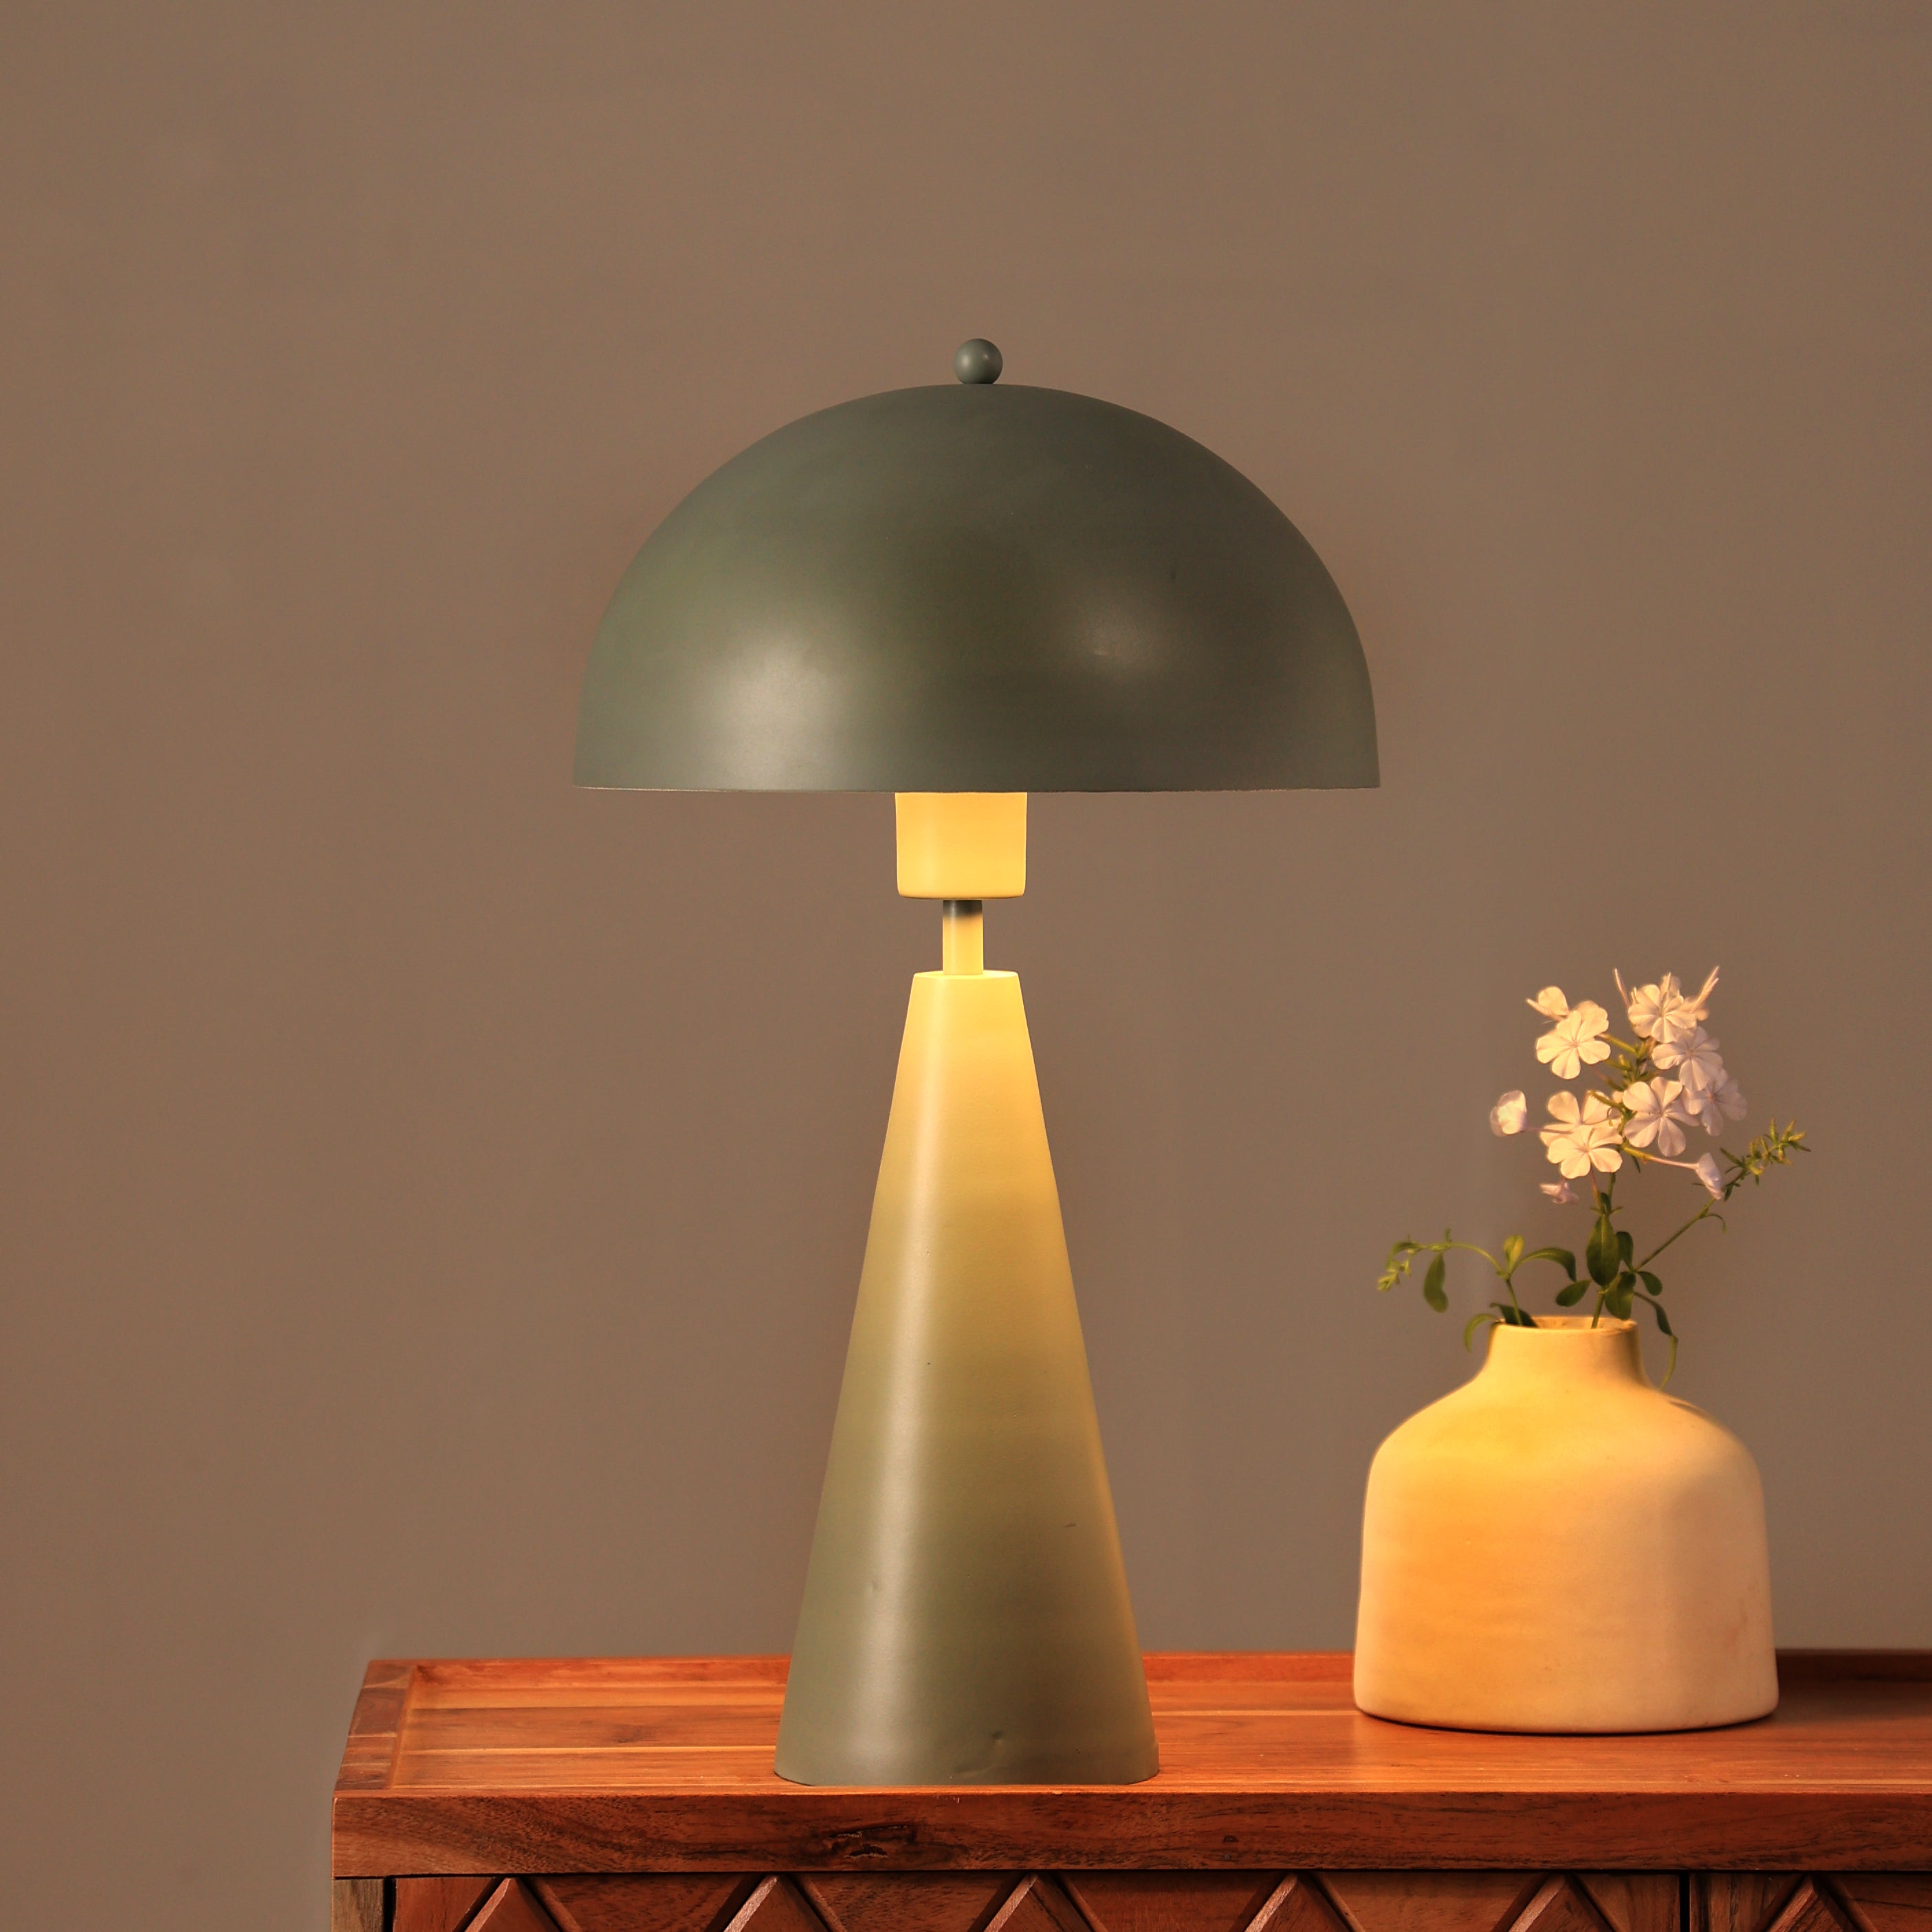 Hoa Sphere - Table Lamp, Modern Scandinavian Design, Premium Metallic Finish, Easy Installation